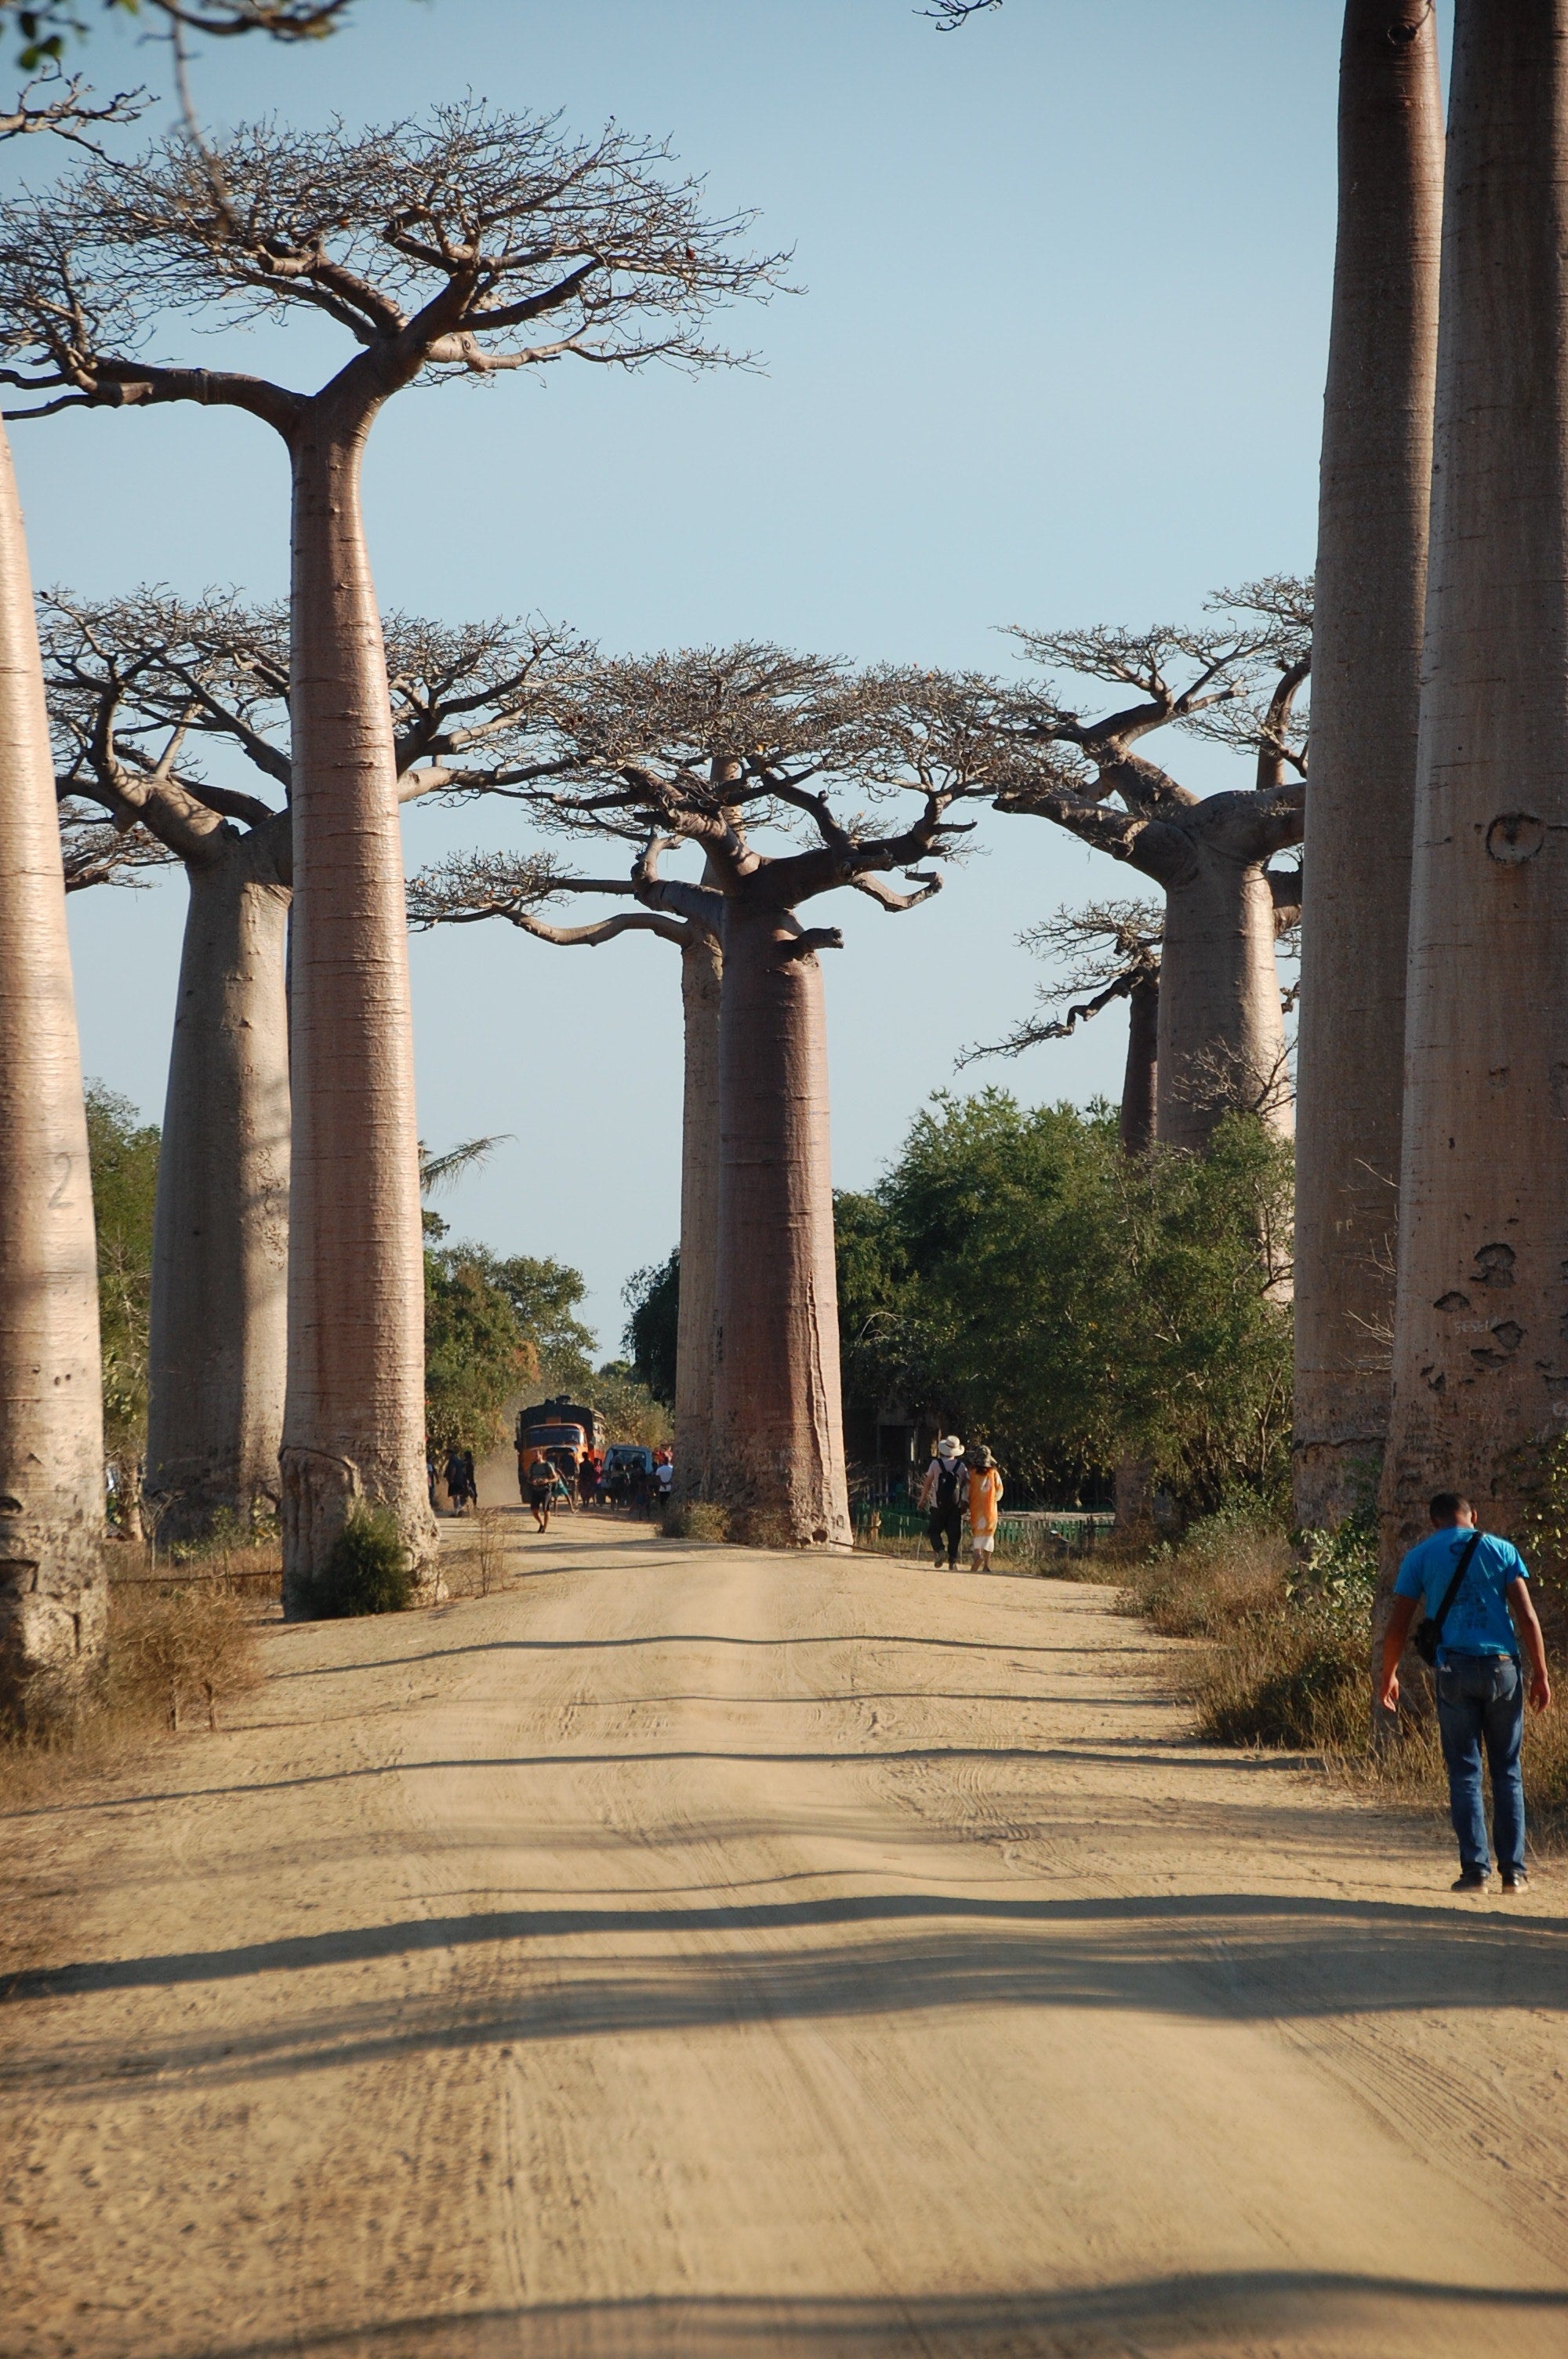 Baobab - Adonsonia digitata